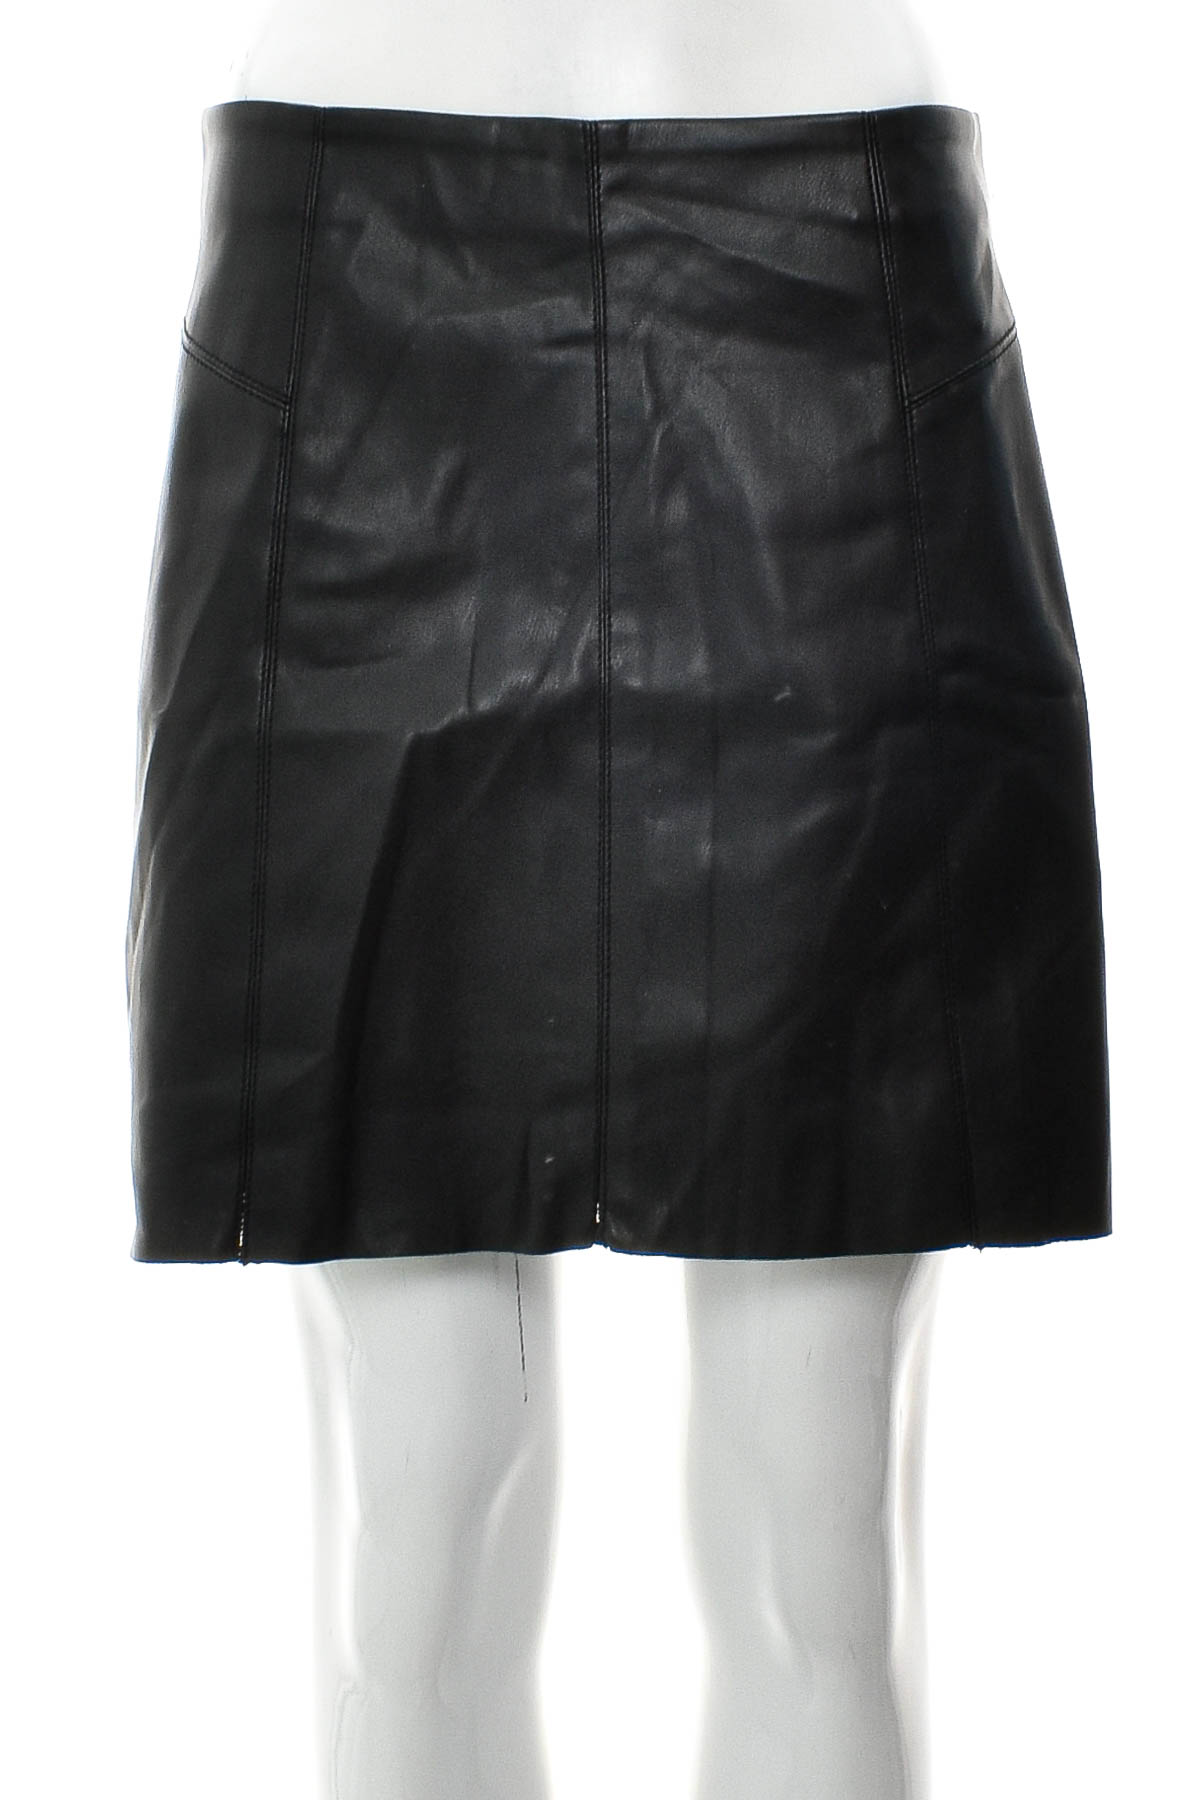 Leather skirt - Pimkie - 0